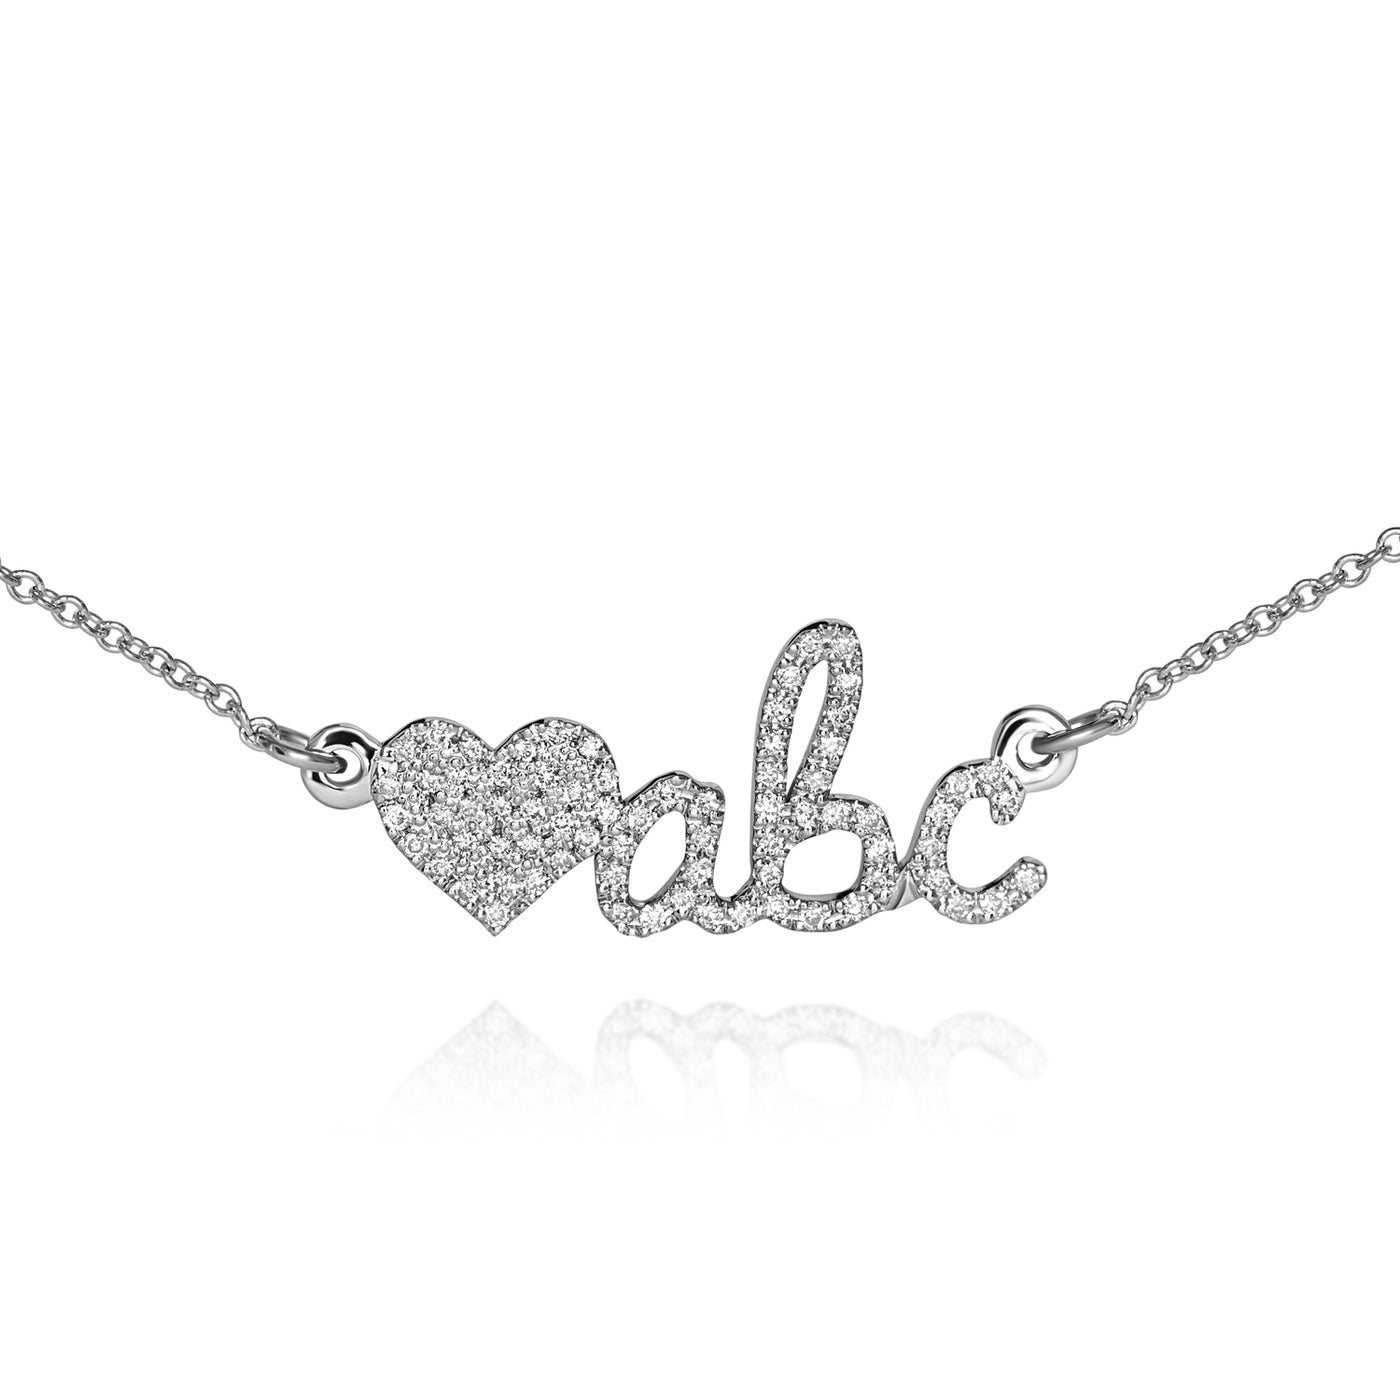 Diamond Name Necklace with a Diamond Heart